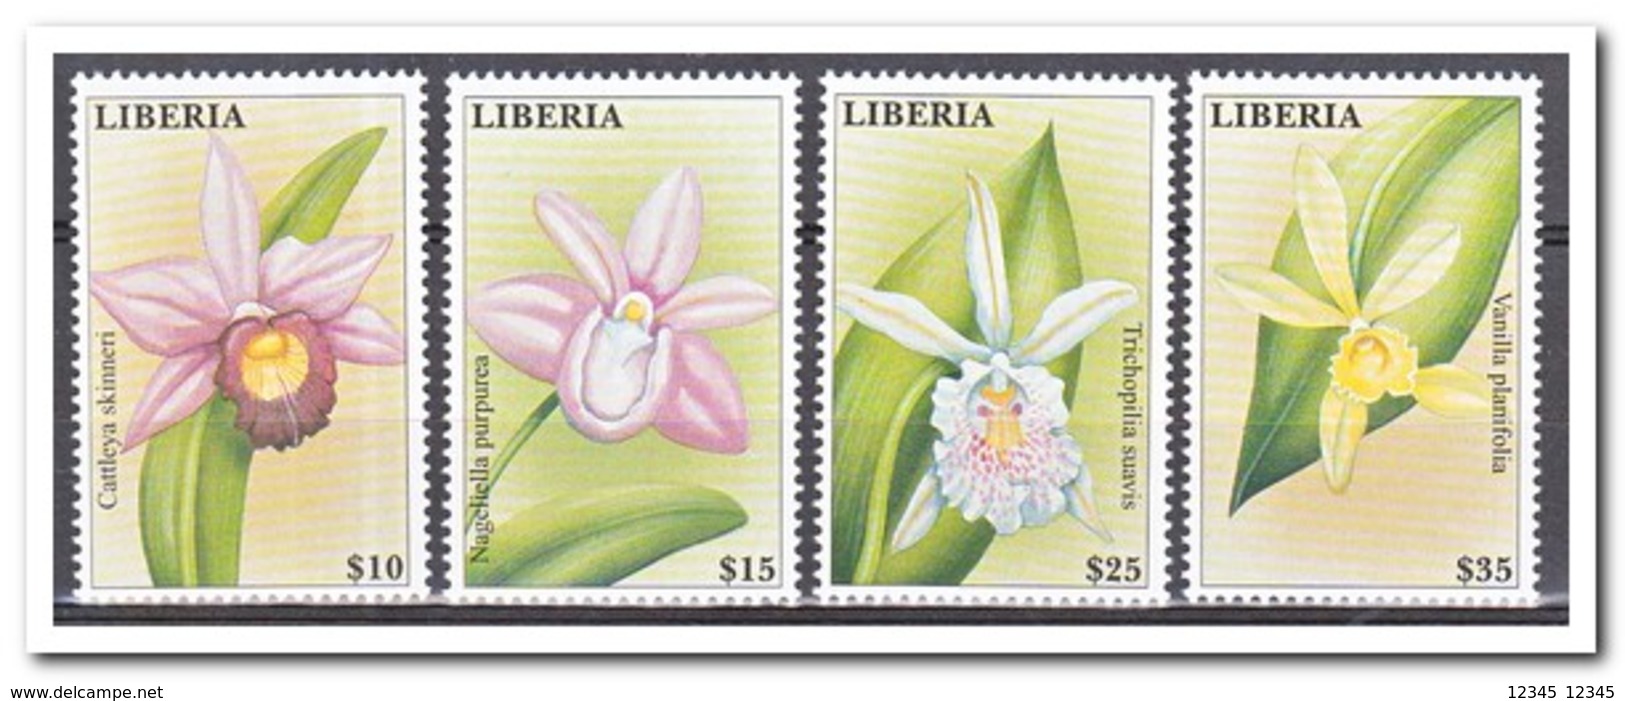 Liberia 2000, Postfris MNH, Flowers, Orchids - Liberia